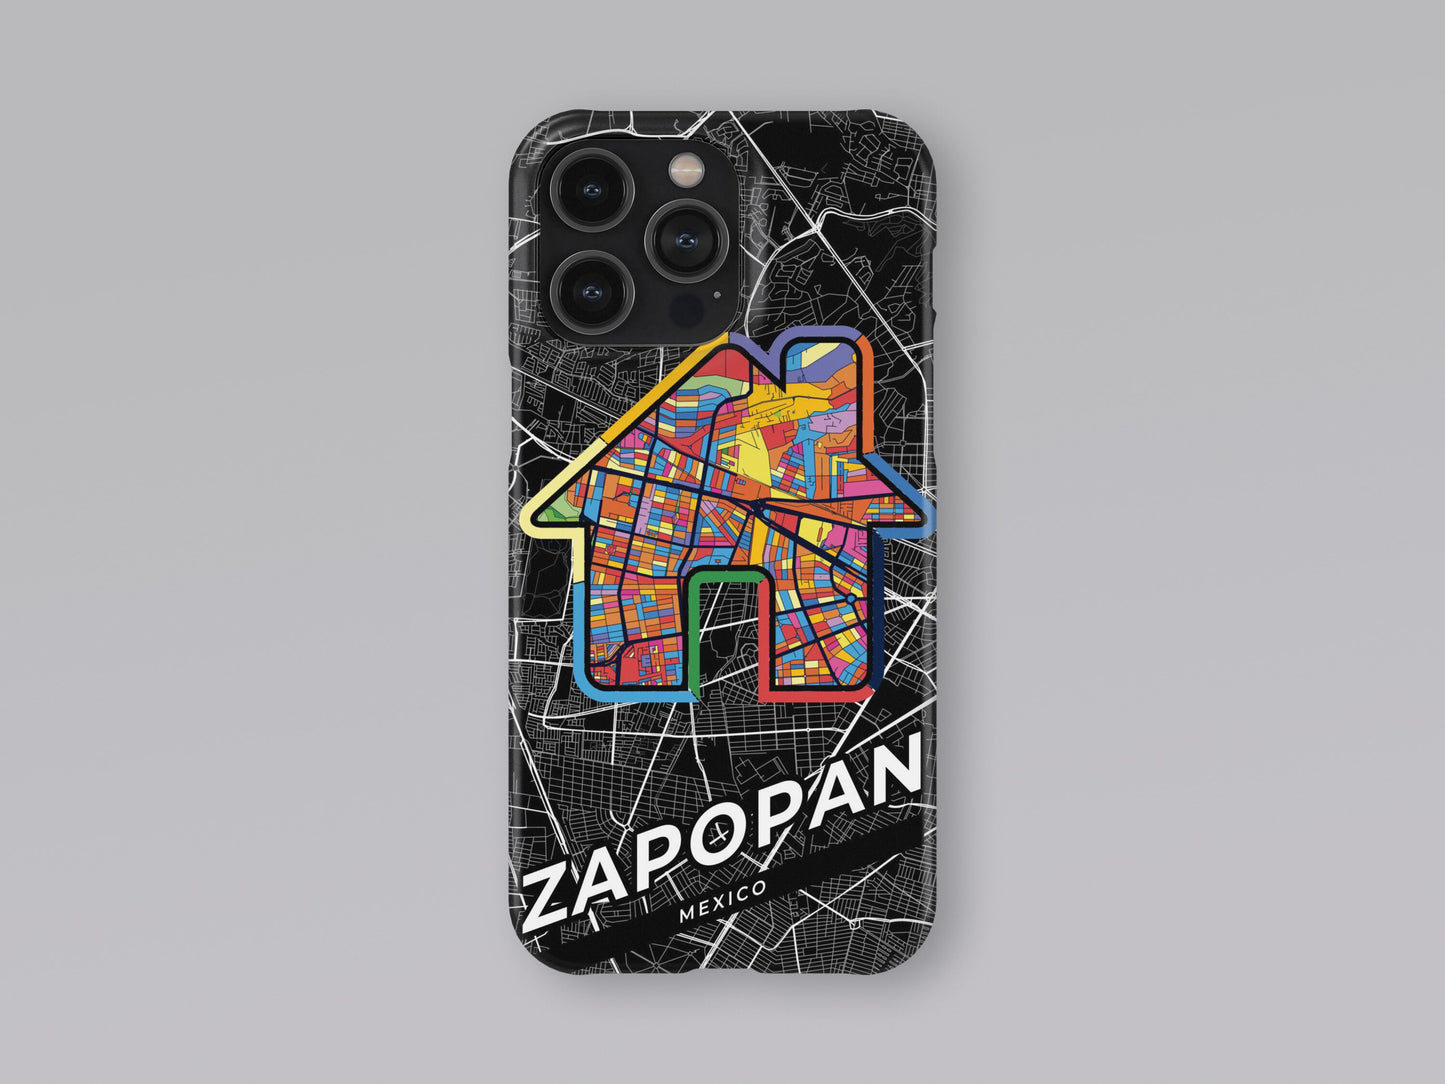 Zapopan Mexico slim phone case with colorful icon 3